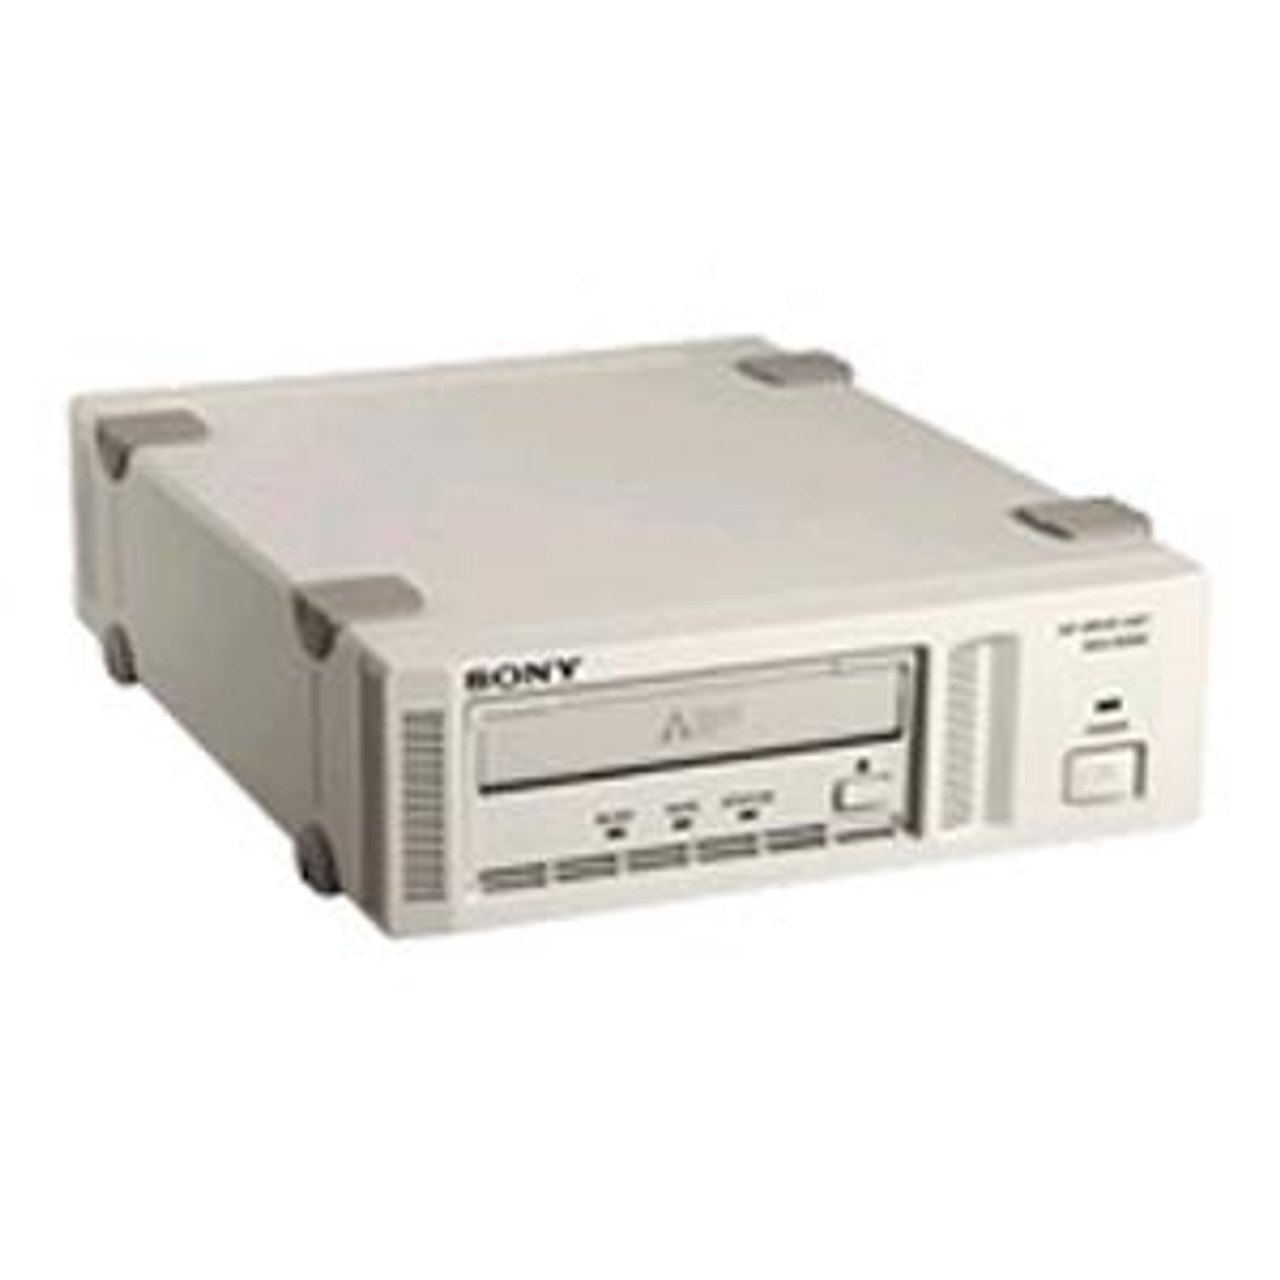 AITE90-UL - Sony StorStation AIT-1 External Tape Drive - 35GB (Native)/91GB (Compressed) - USBExternal